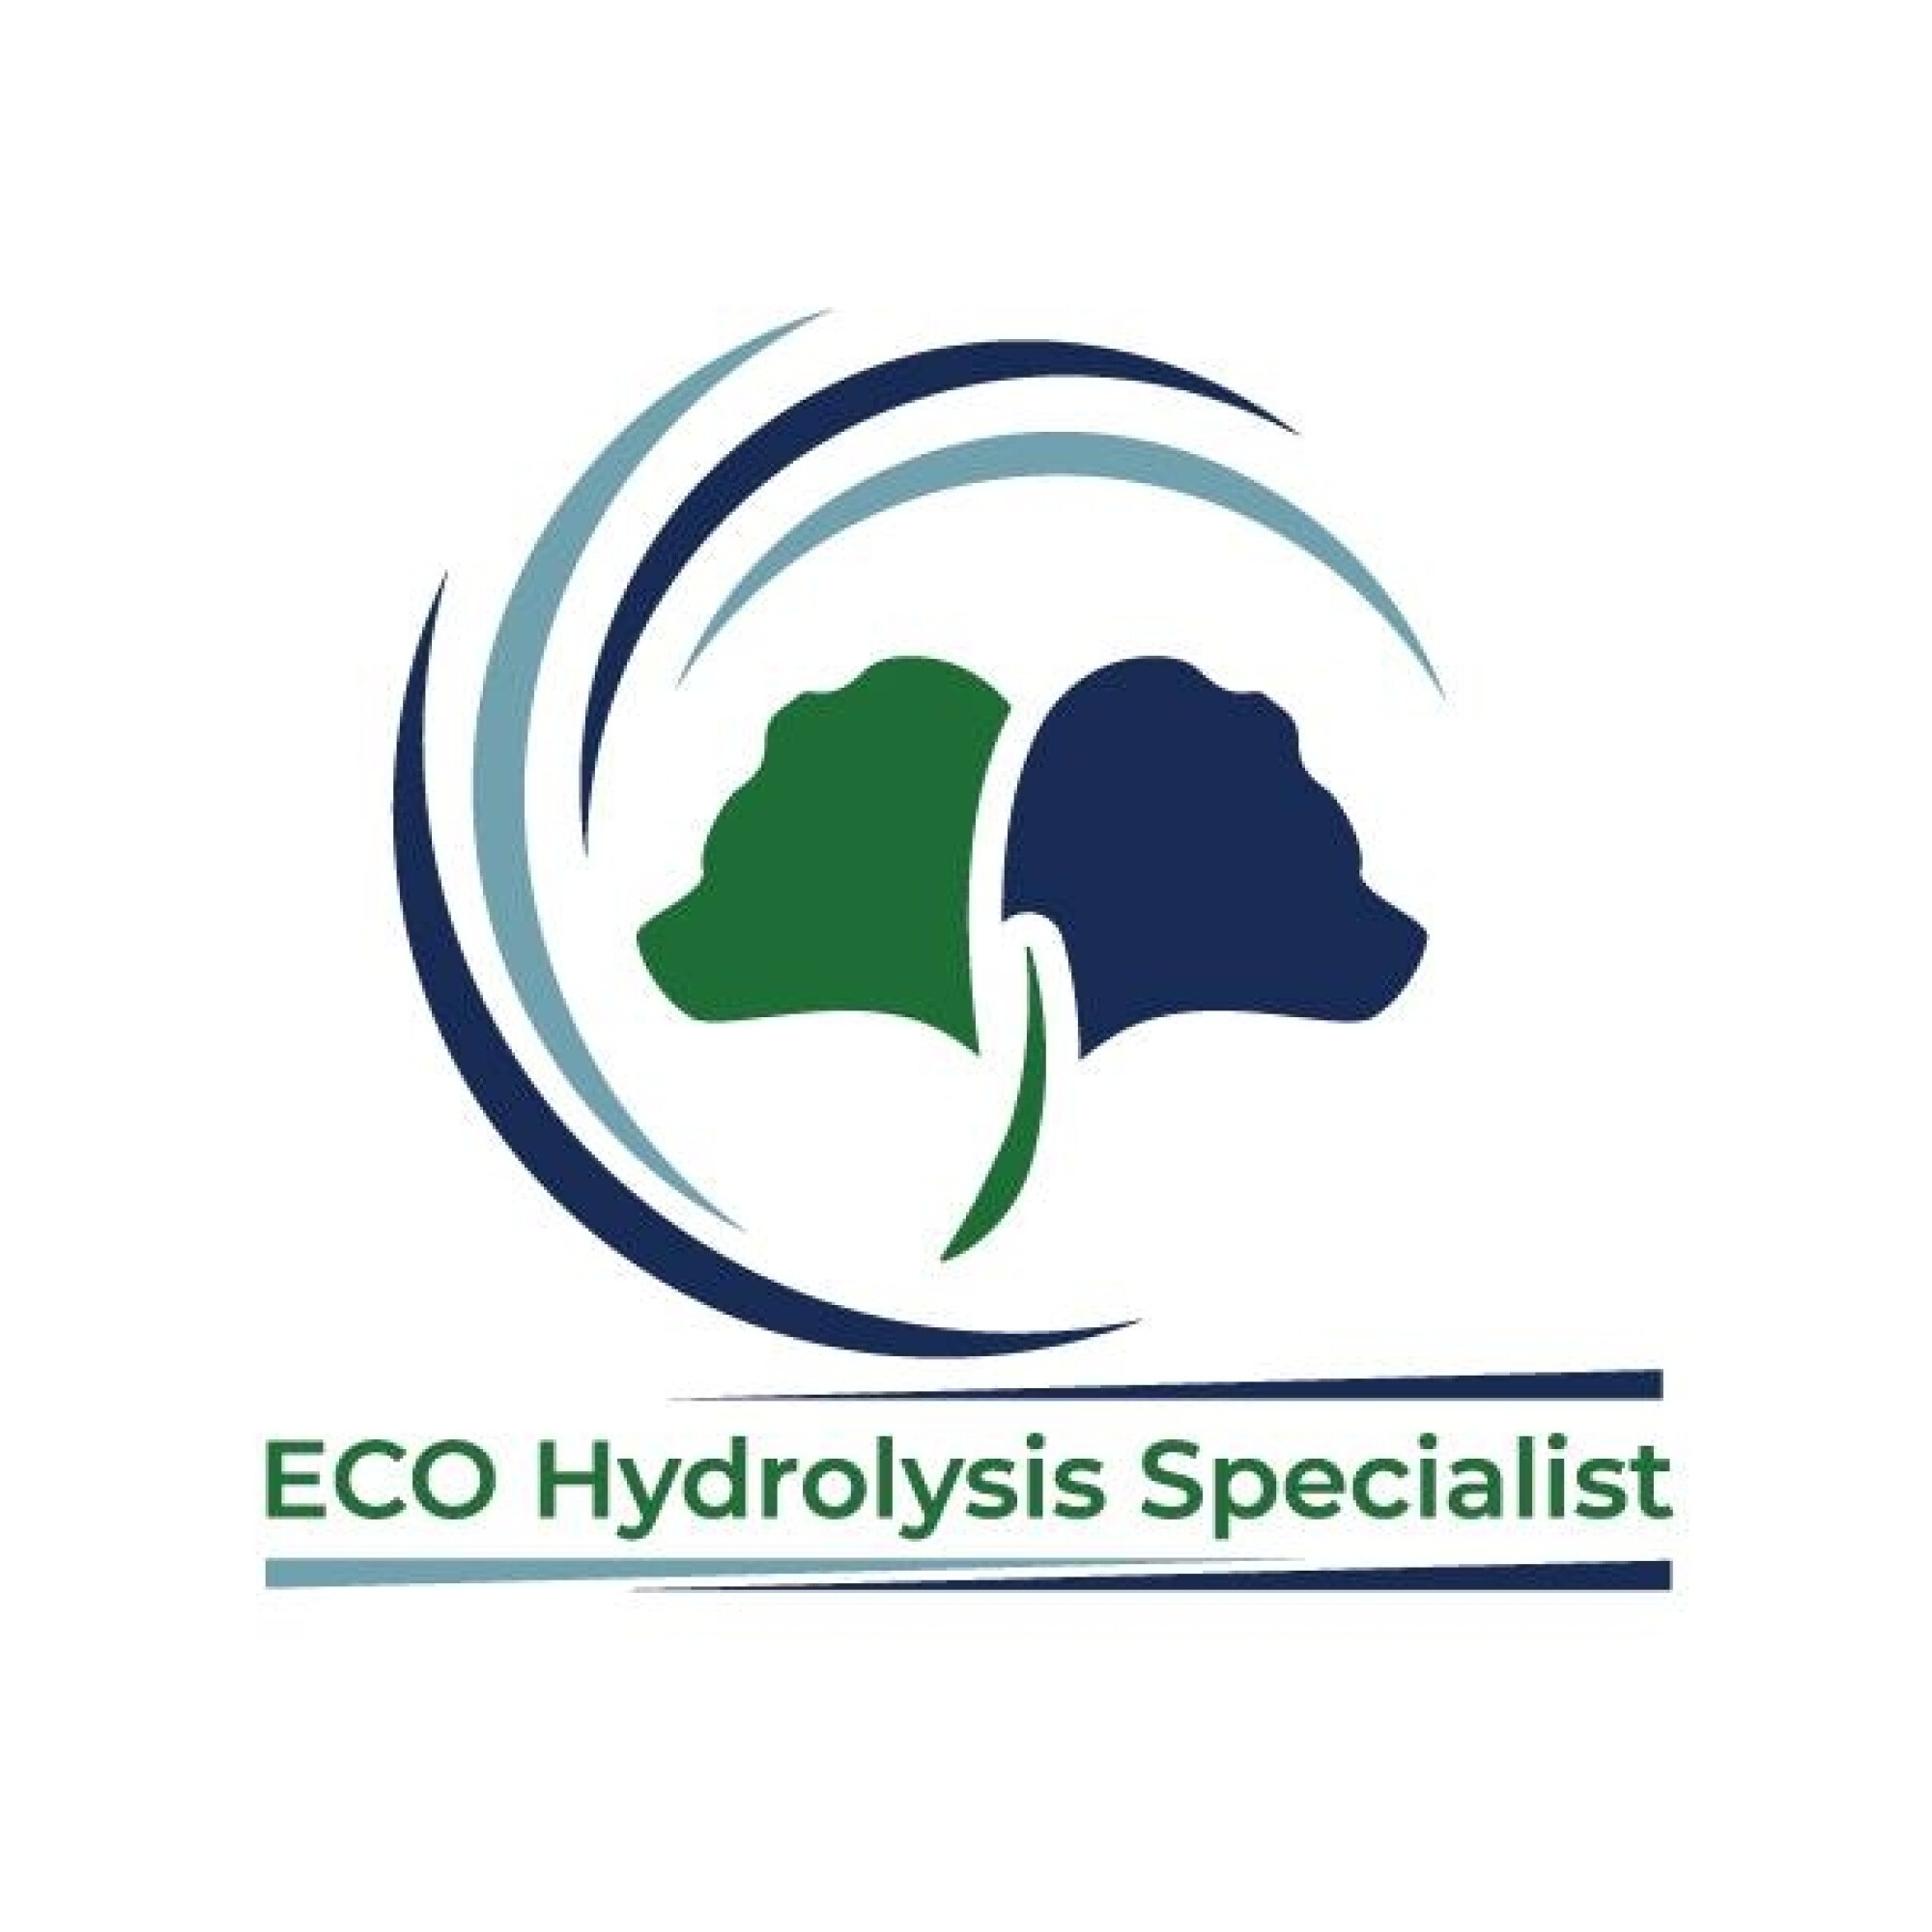 Eco Hydrolysis Specialist